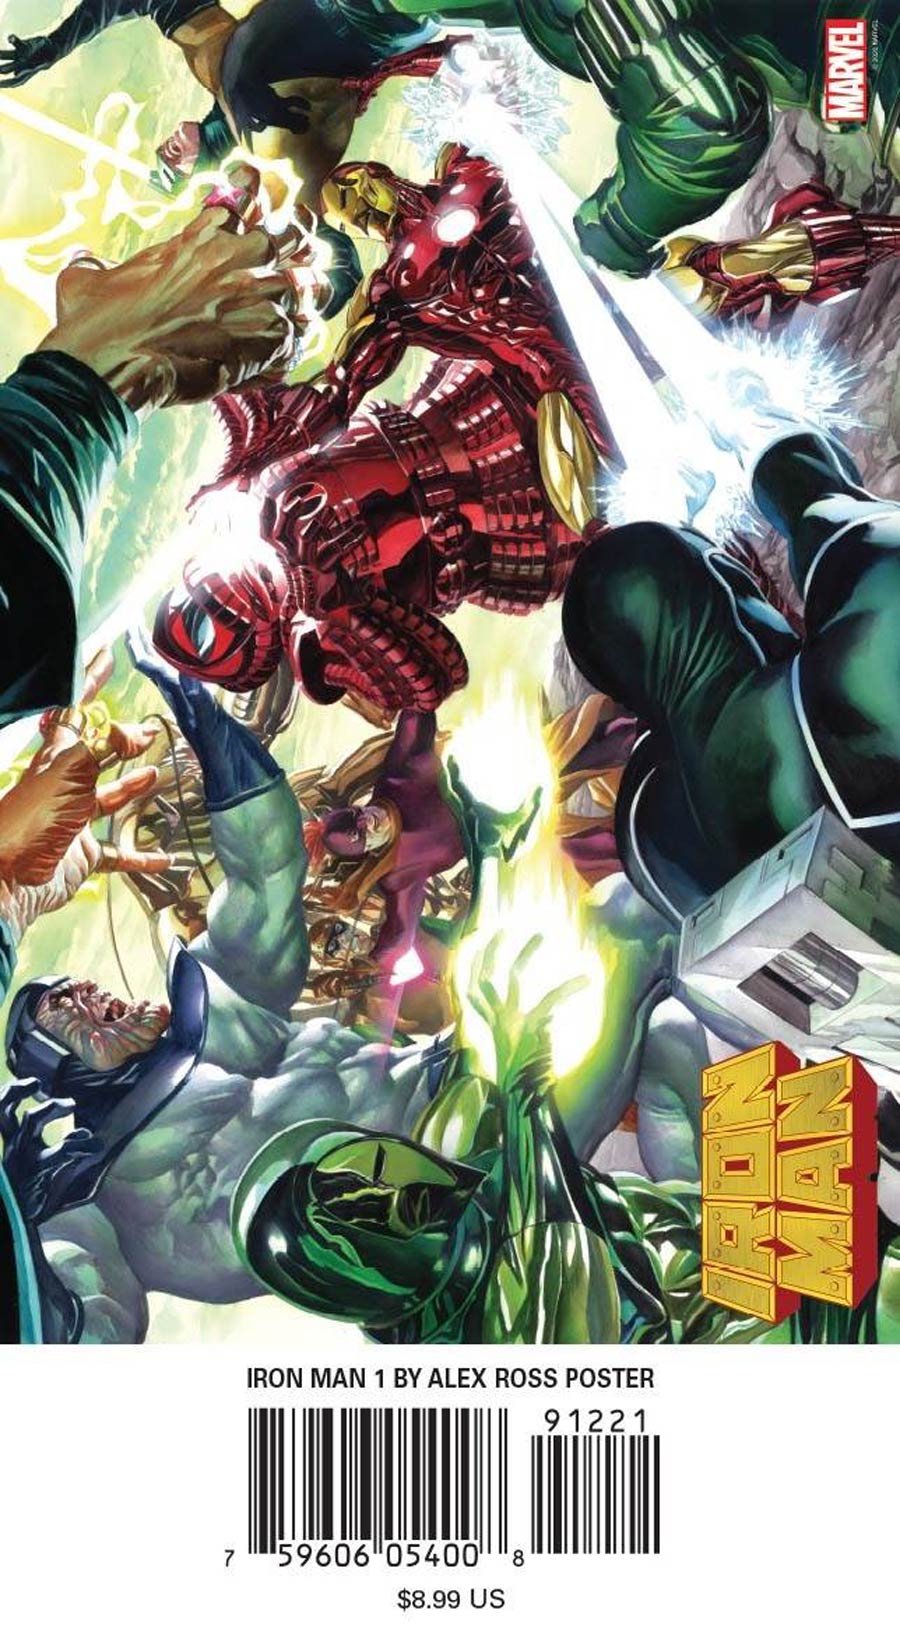 Iron Man Vol 6 #1 By Alex Ross Poster